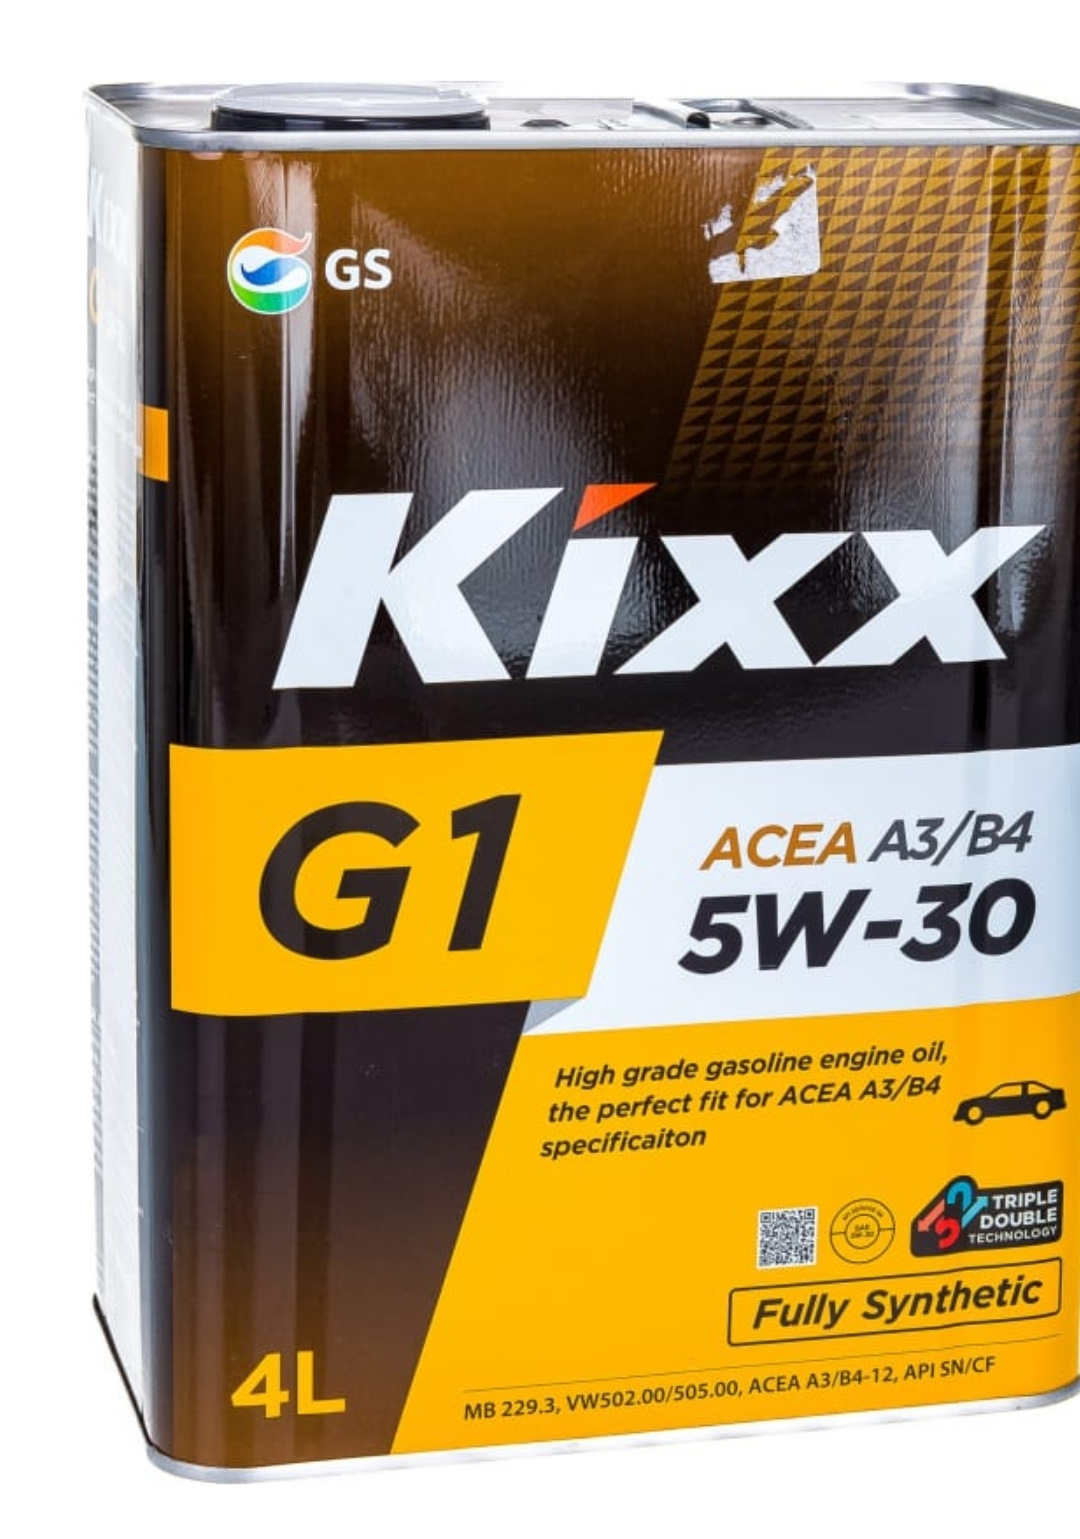 Масло кикс сайт. L531044te1 Kixx. Масло Кикс 5w30 синтетика. Масло моторное Kixx g1 5w-30 API SN/CF, ACEA a3/b4 4л l531044te1. Kixx 5w30 синтетика.